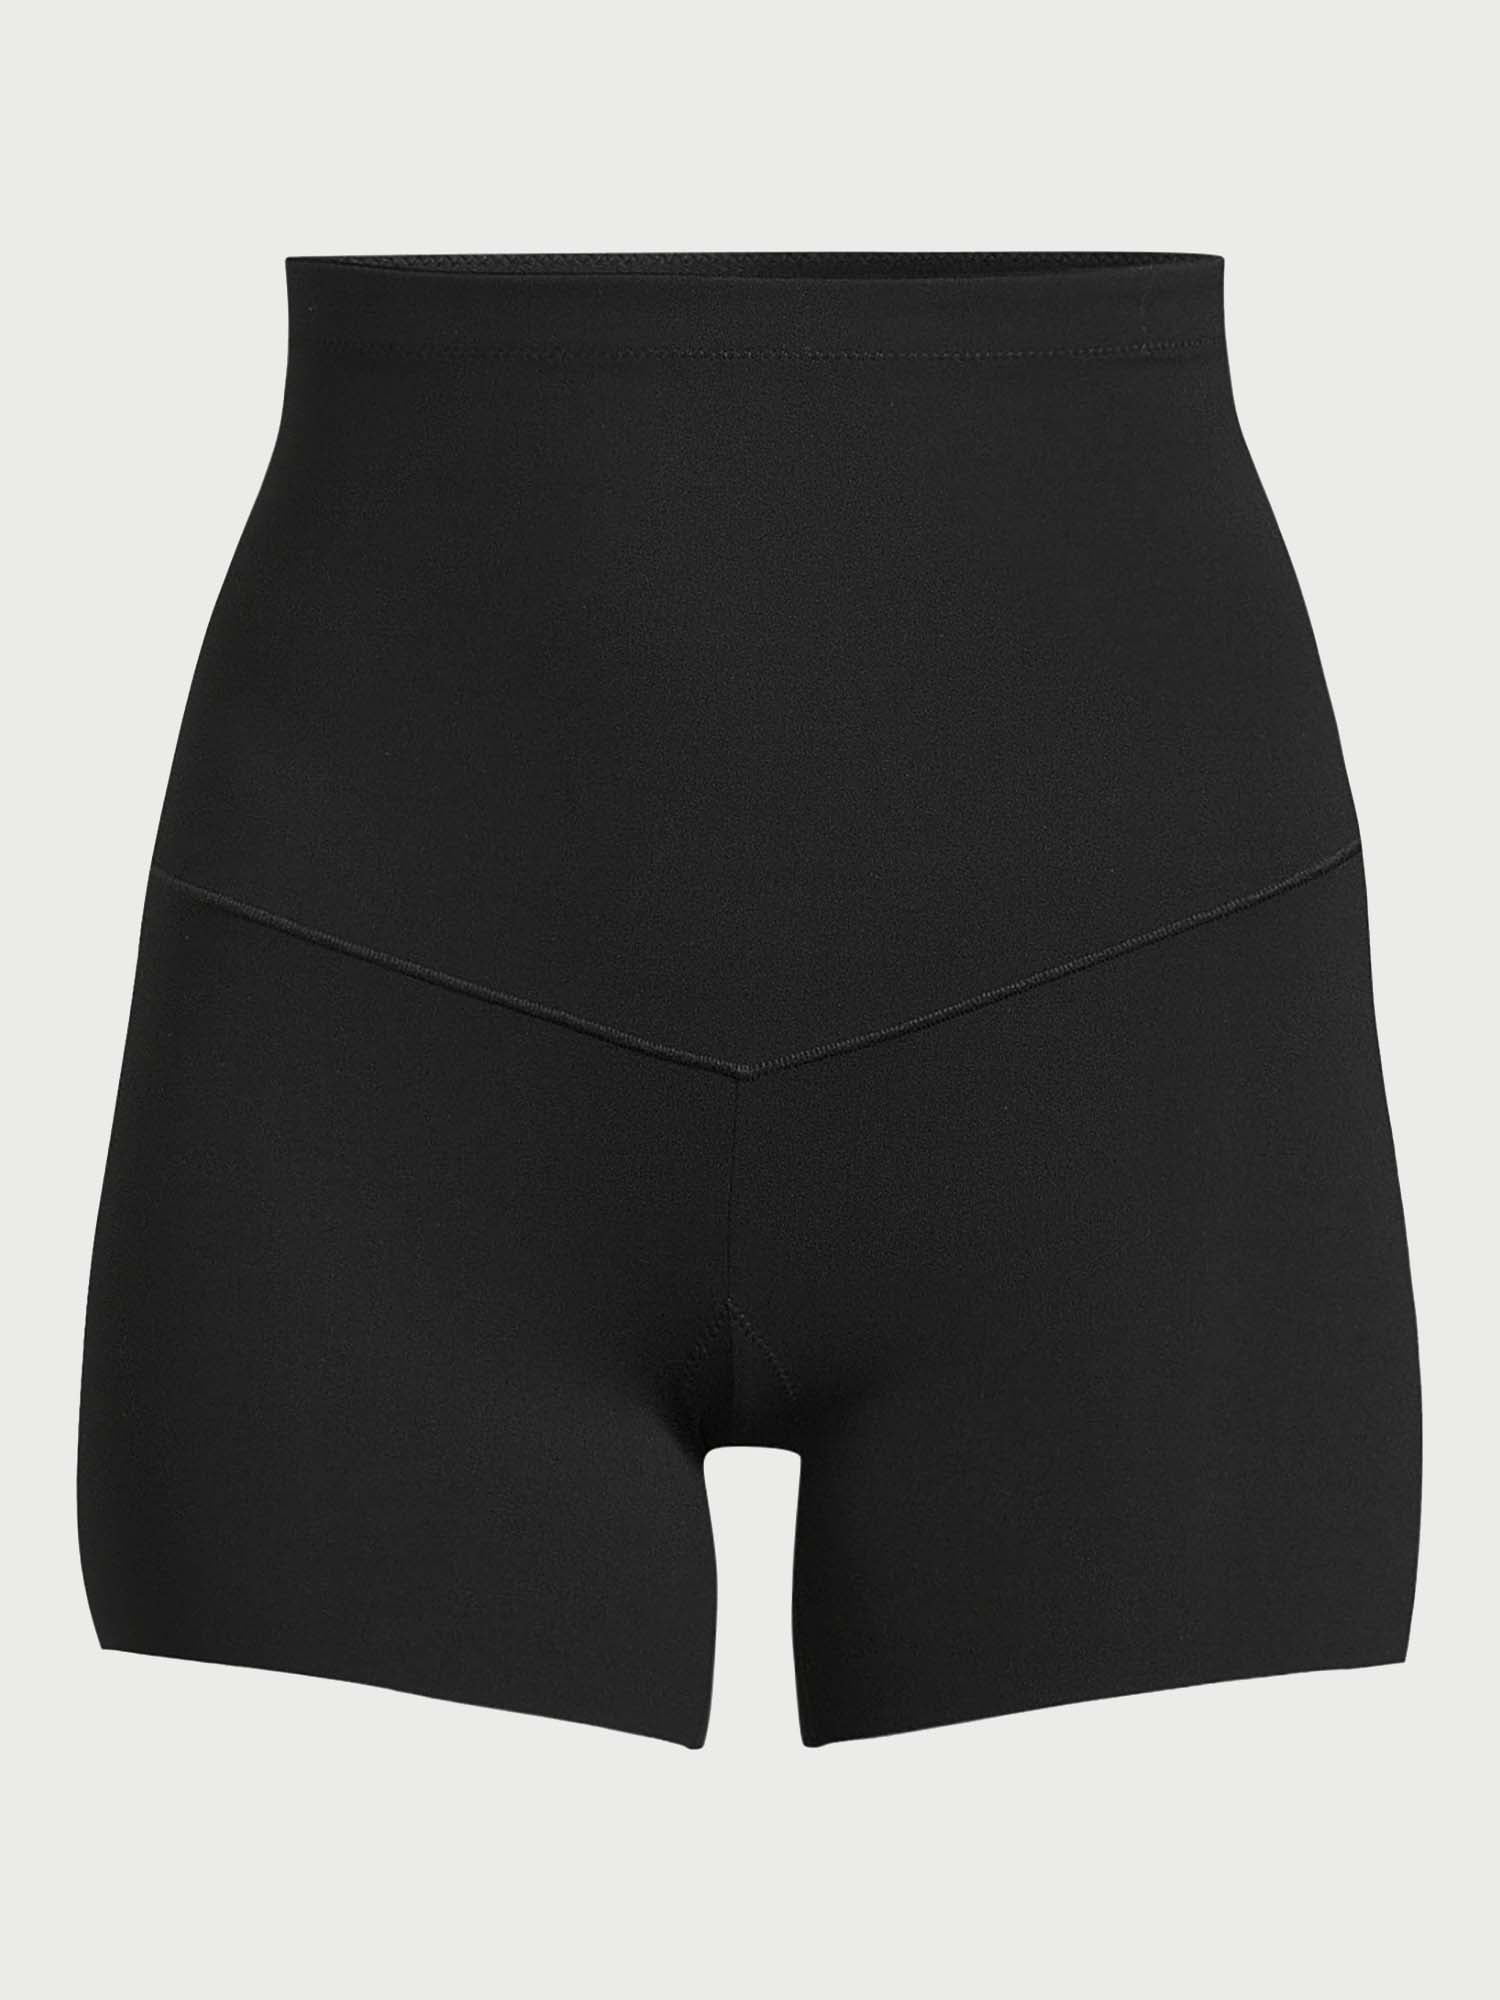 Joyspun Women's Midrise Shaping Boyshort Underwear, Sizes S to 3X